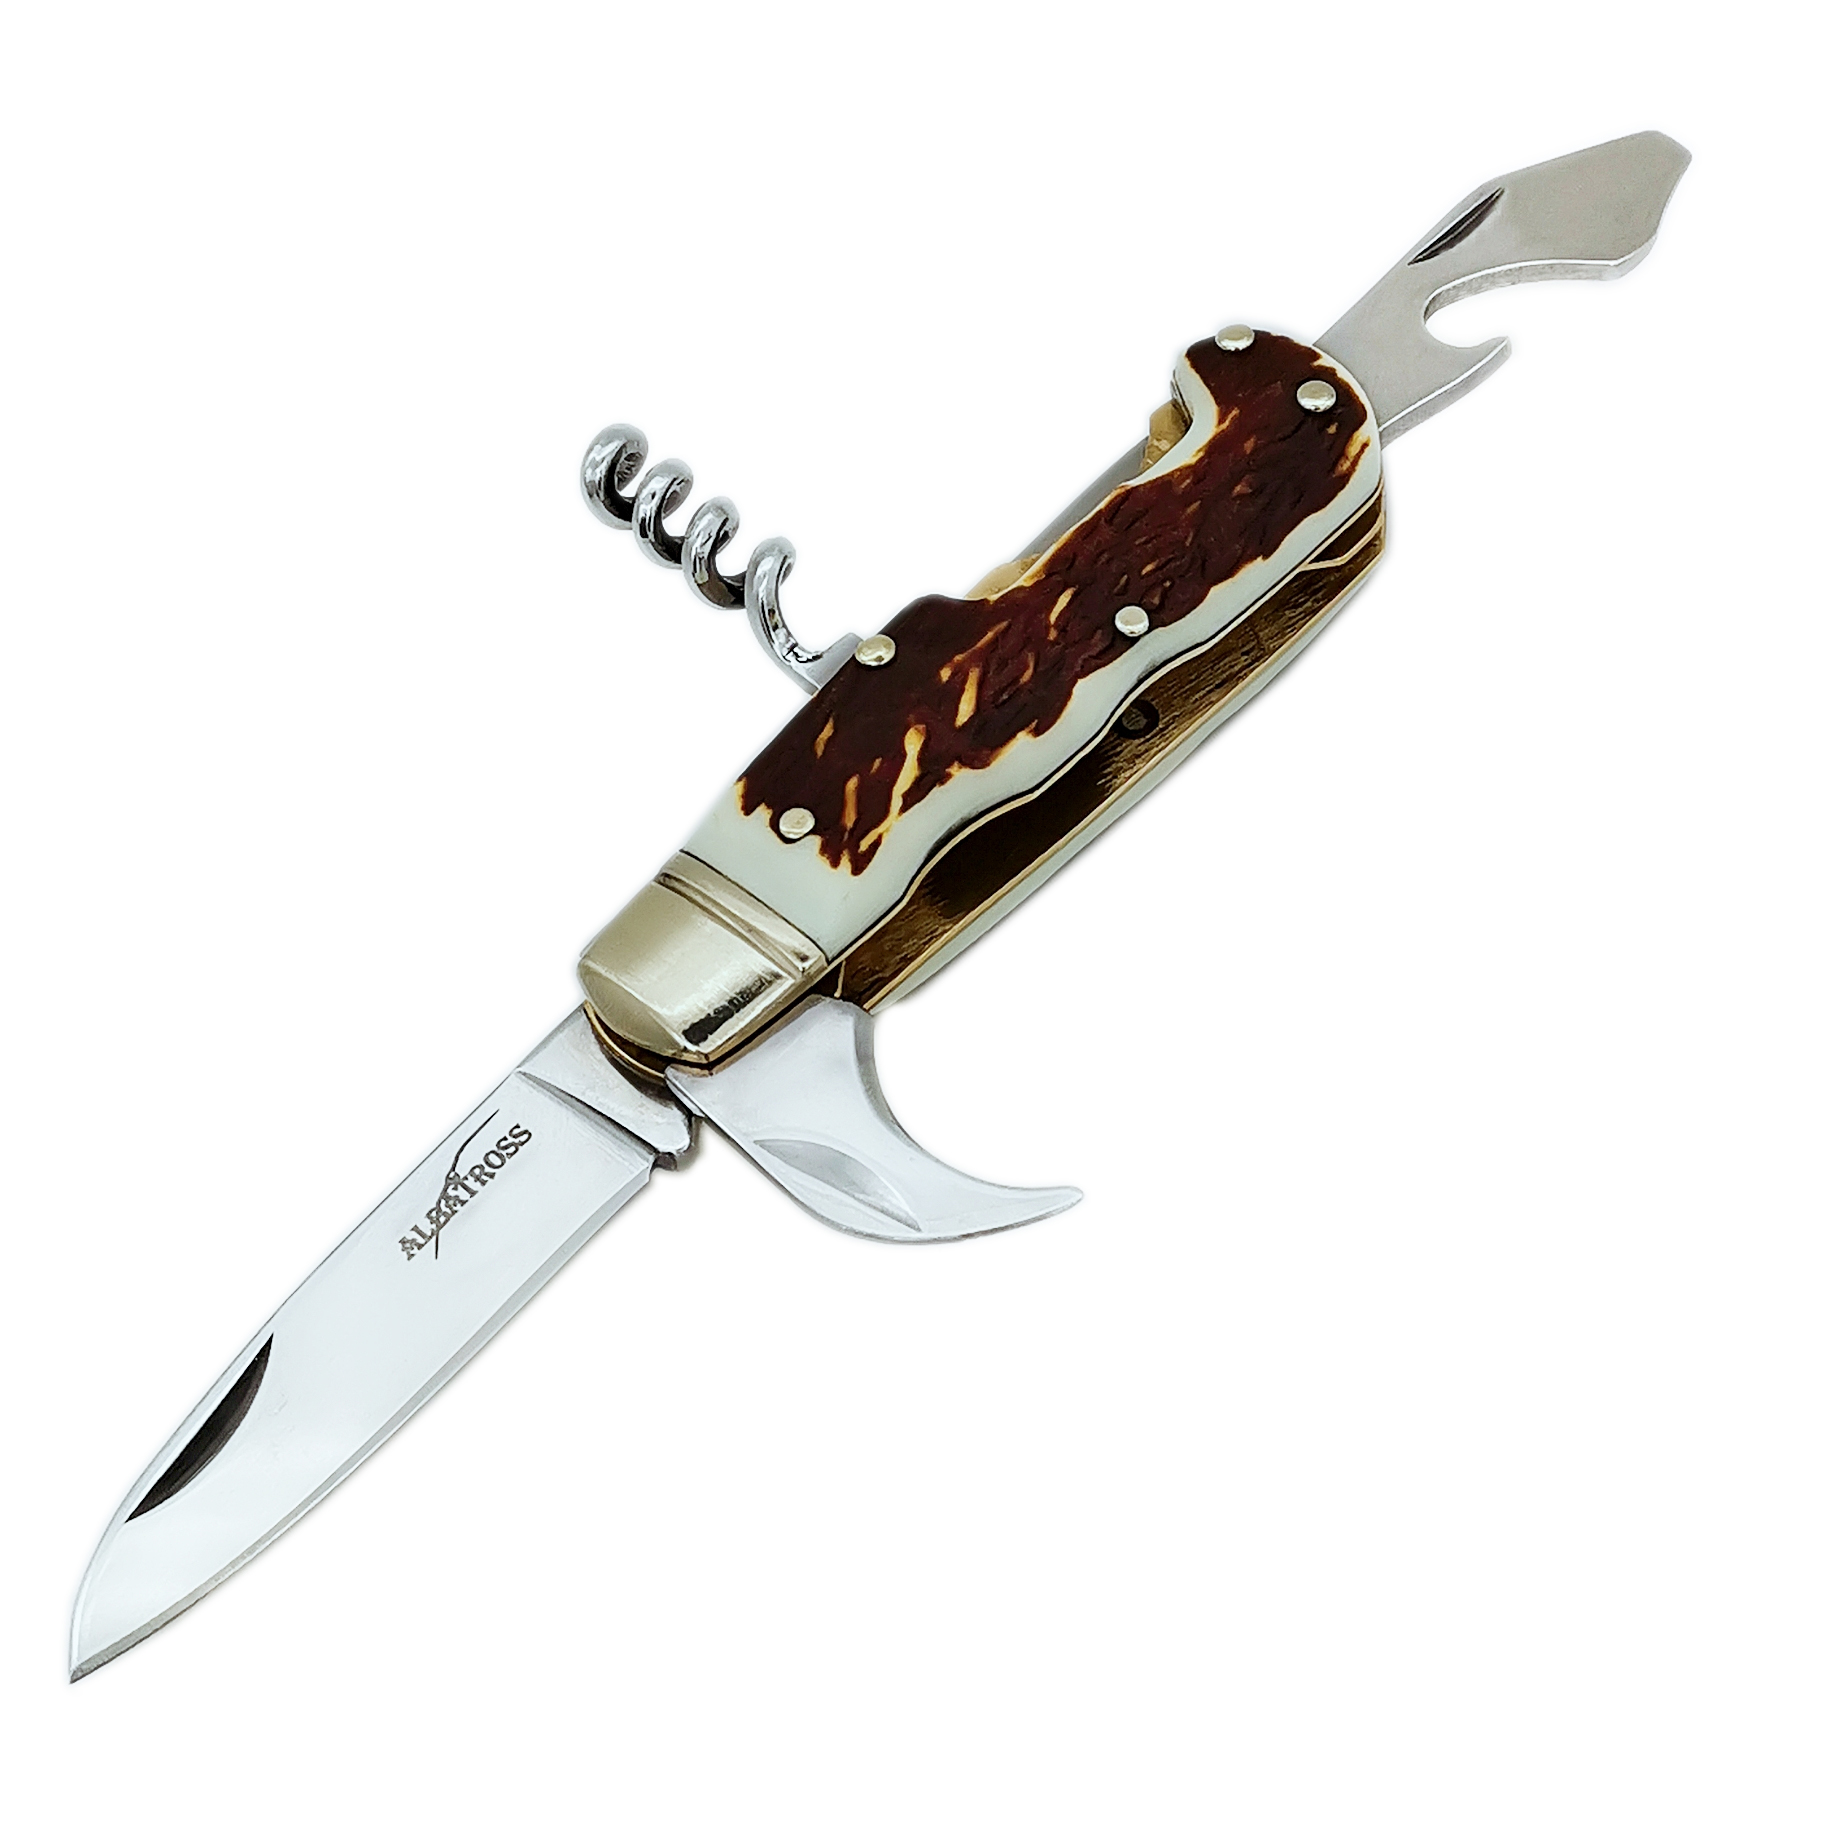 ALBATROSS FK027 4 in 1 Folding Pocket Knife with Back Lock,Wine Opener,Foil Cutter,Beer Opener